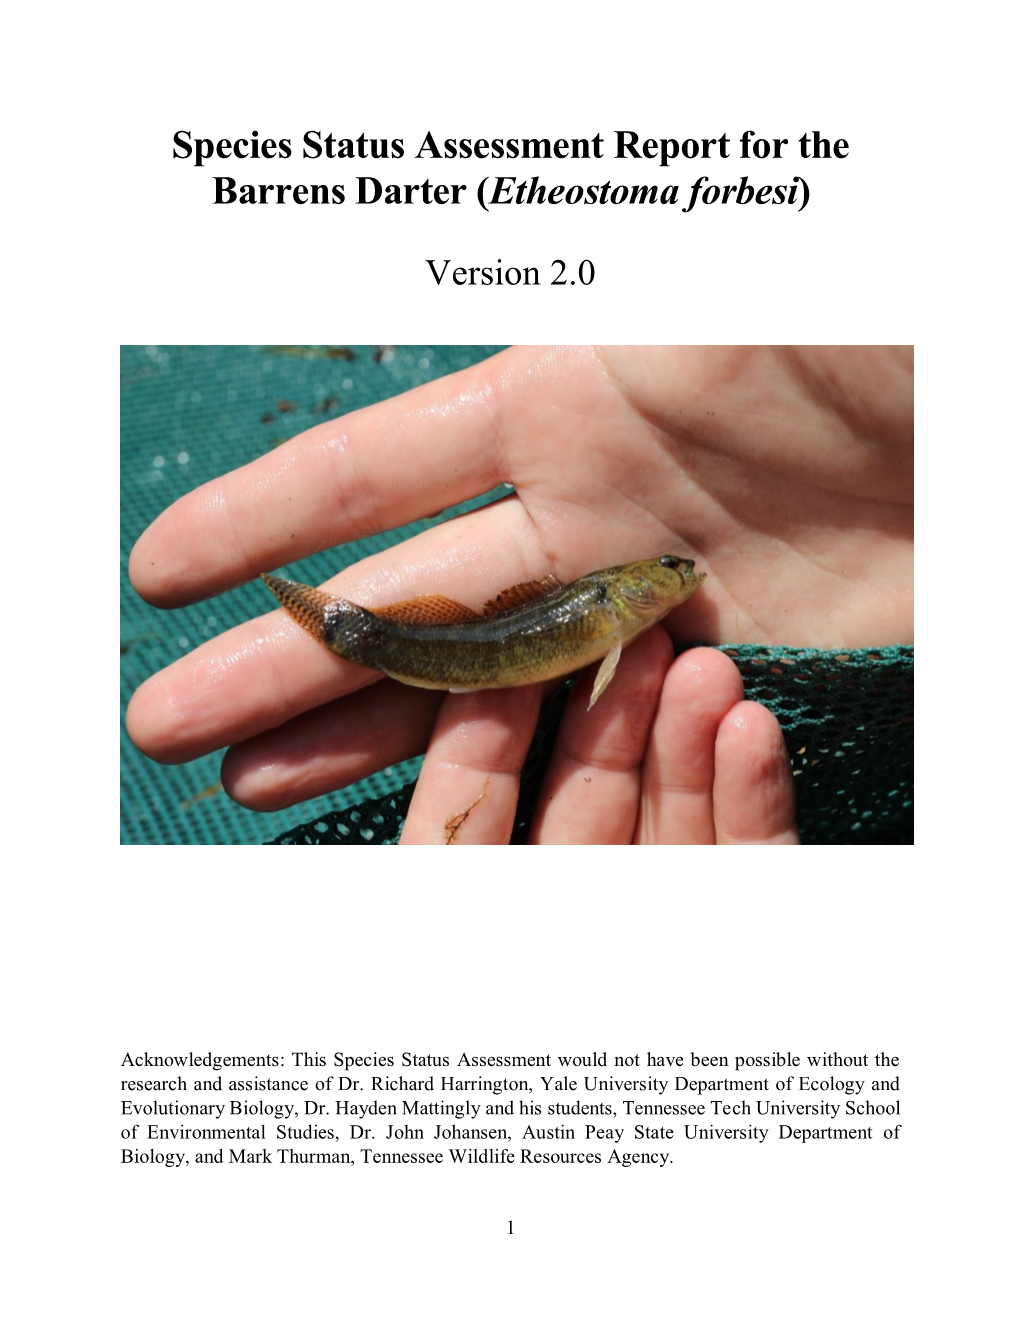 Species Status Assessment Report for the Barrens Darter (Etheostoma Forbesi)